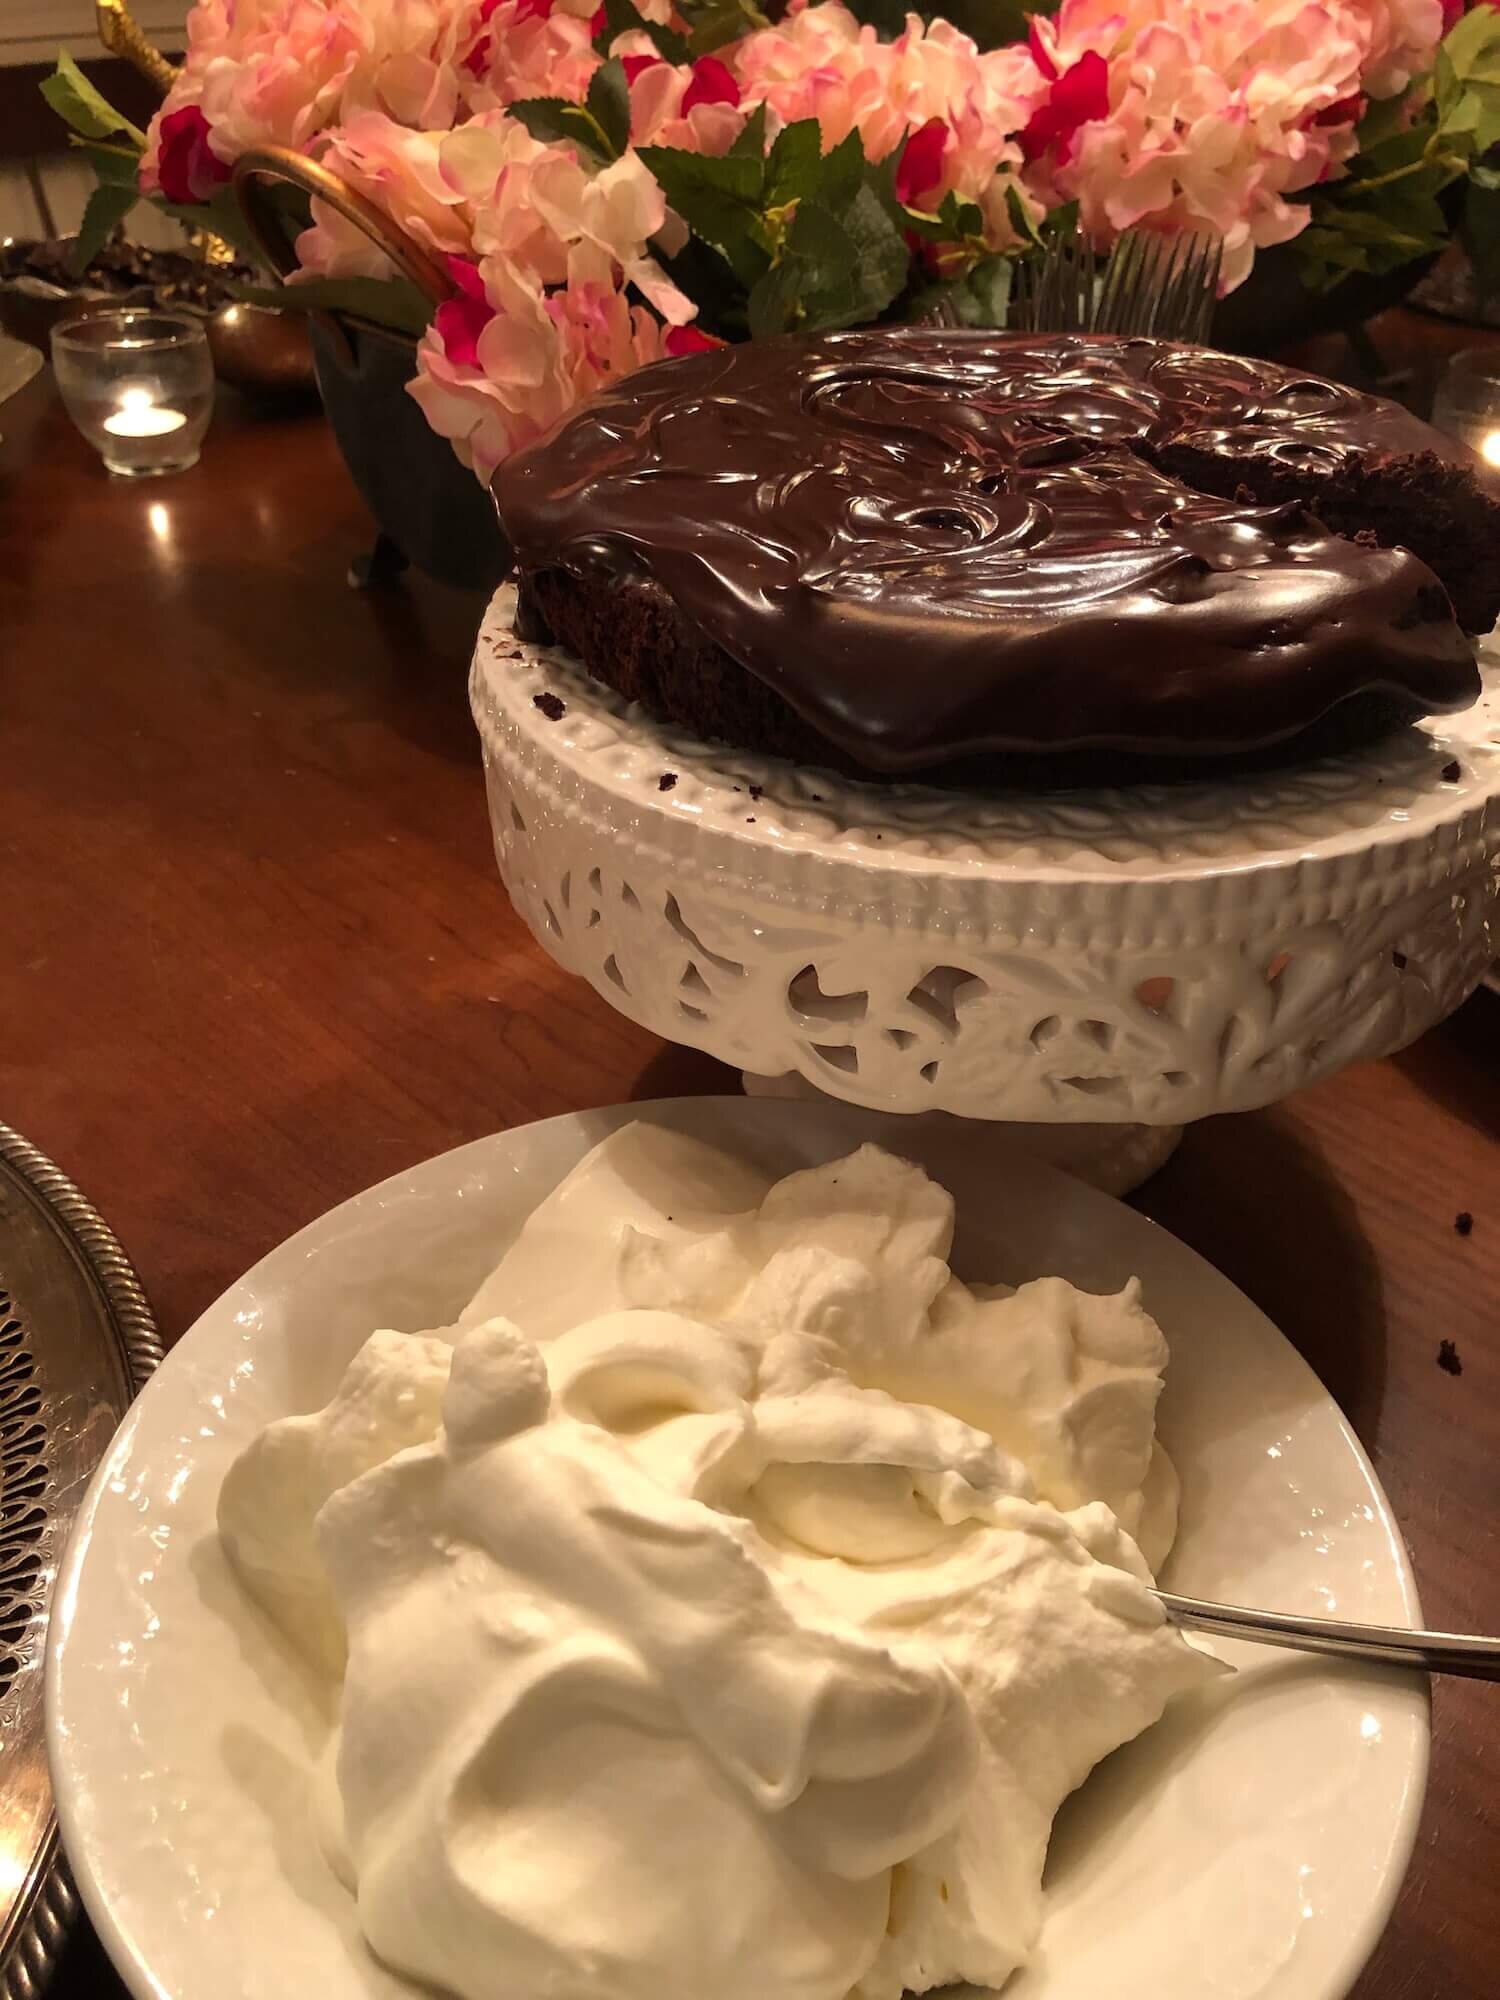 flourless chocolate cake and whipped cream.jpeg